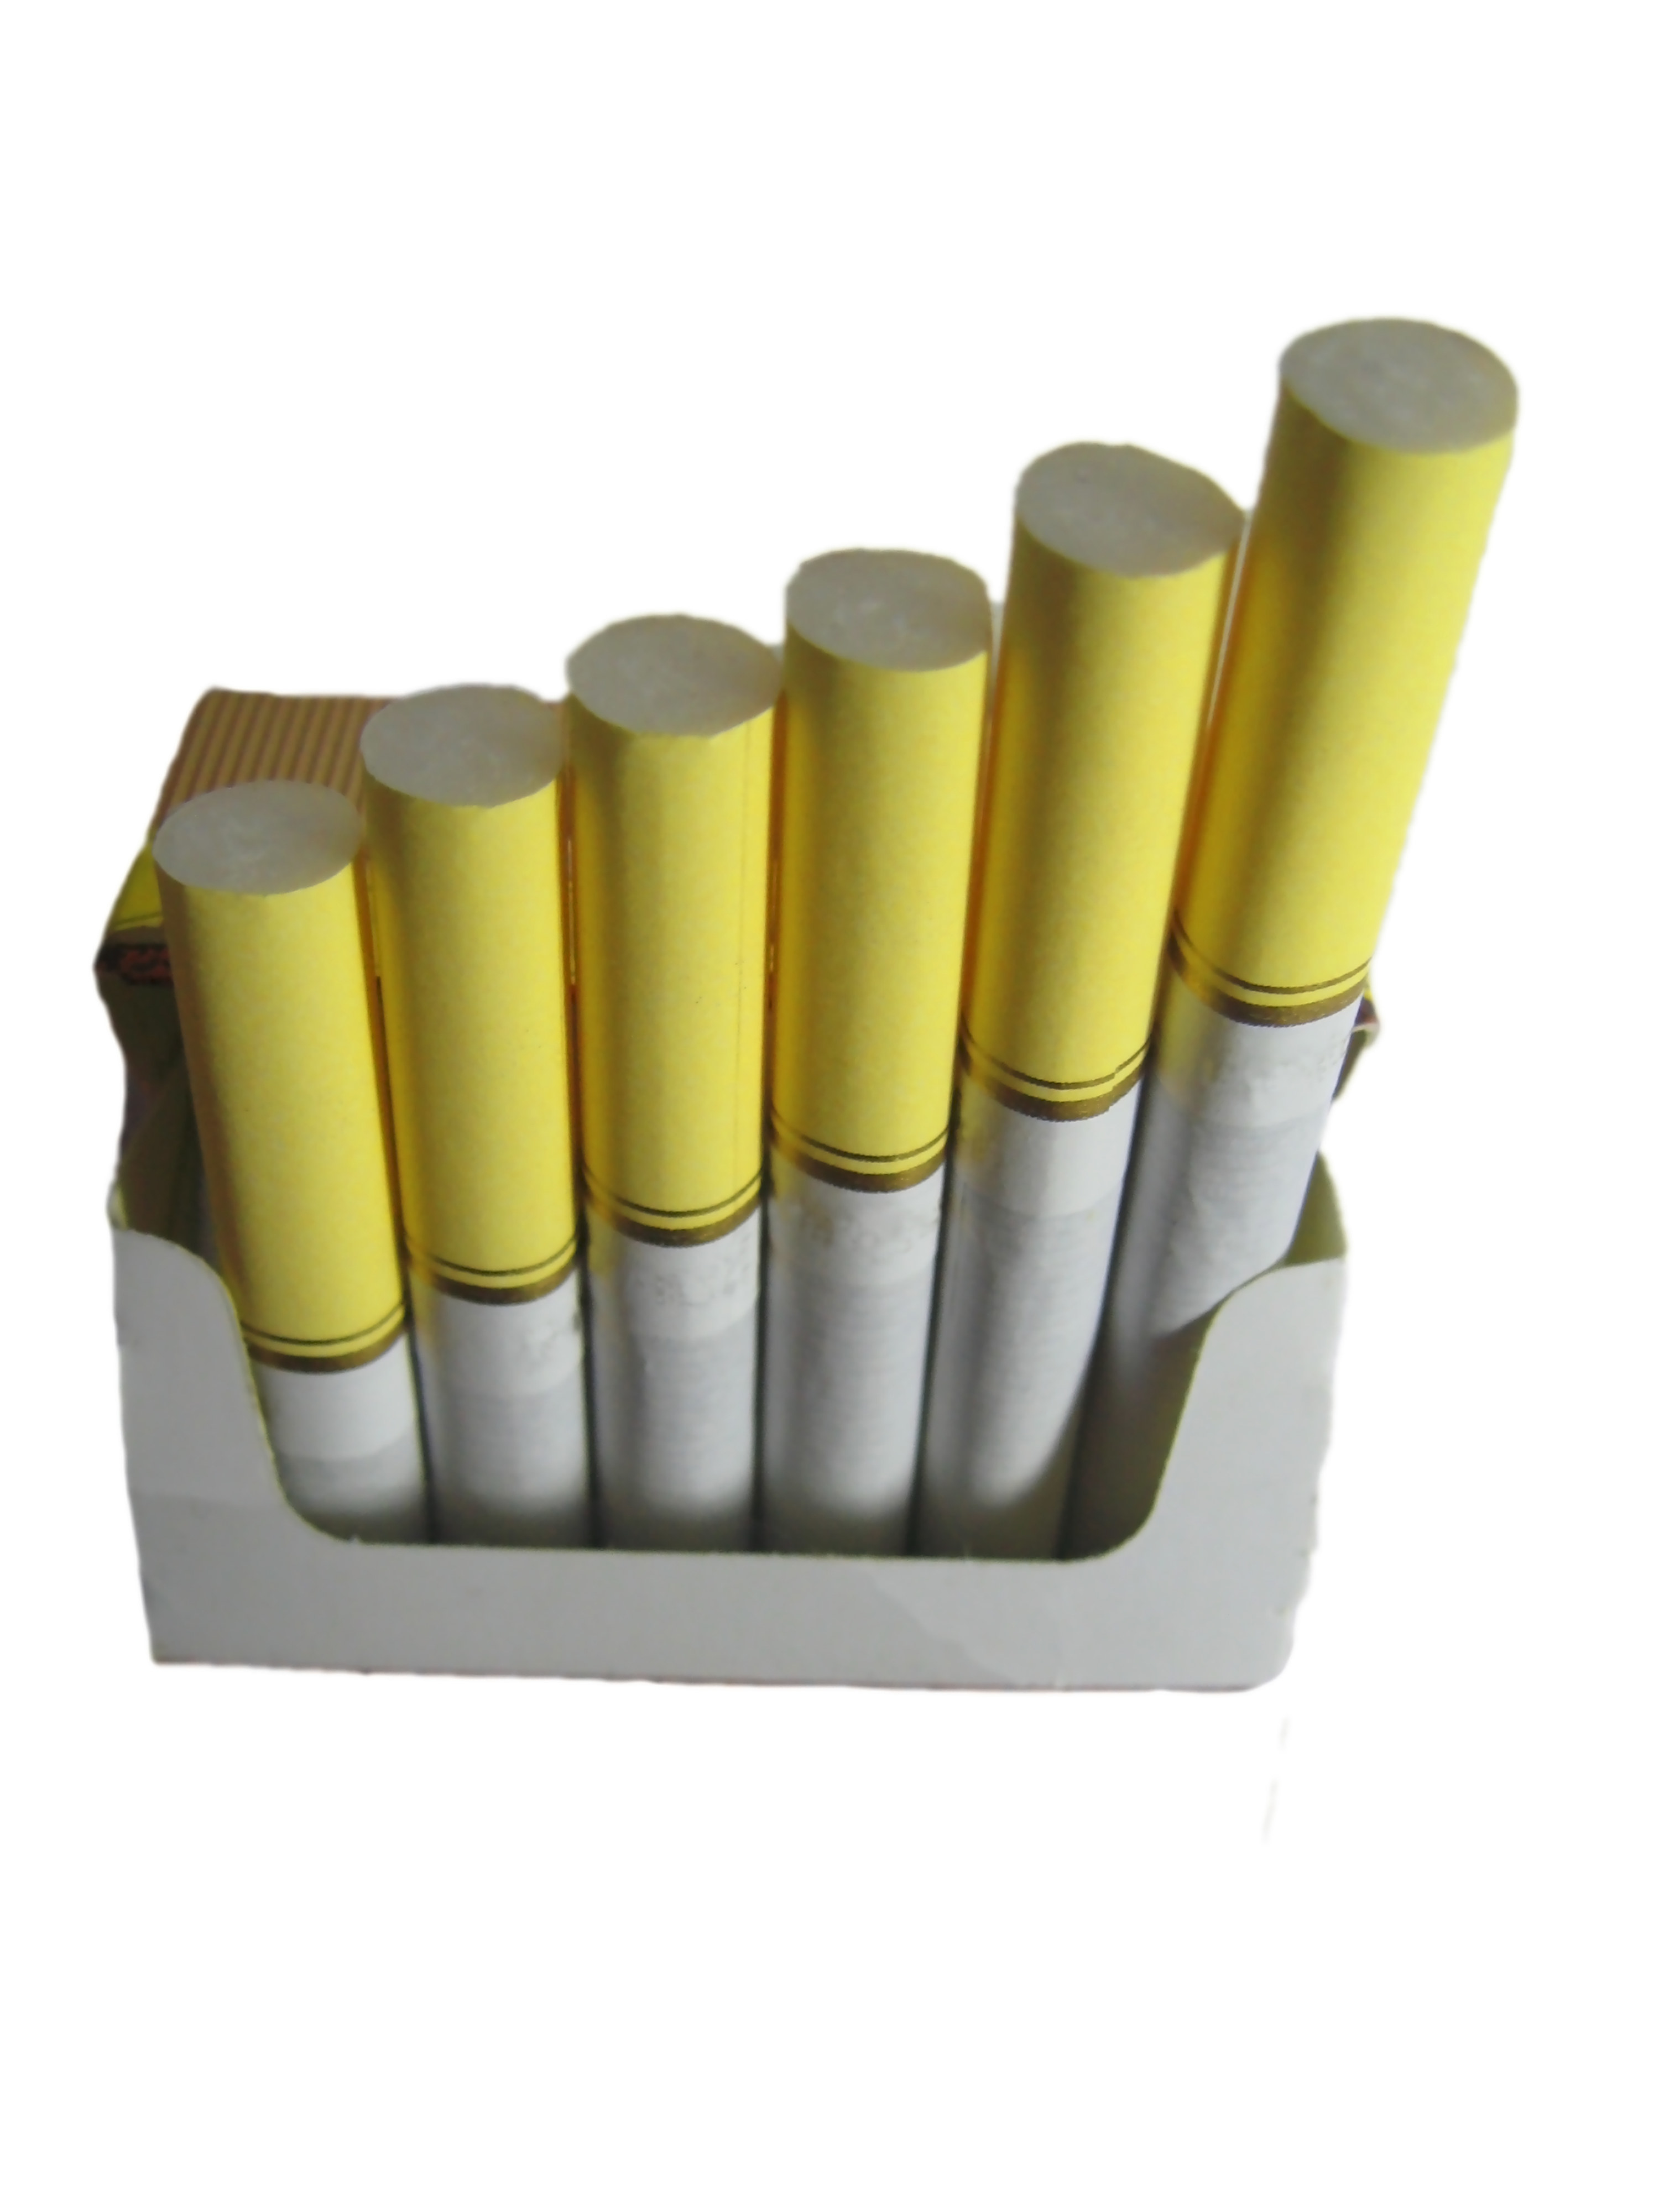 A six-pack of cigarettes